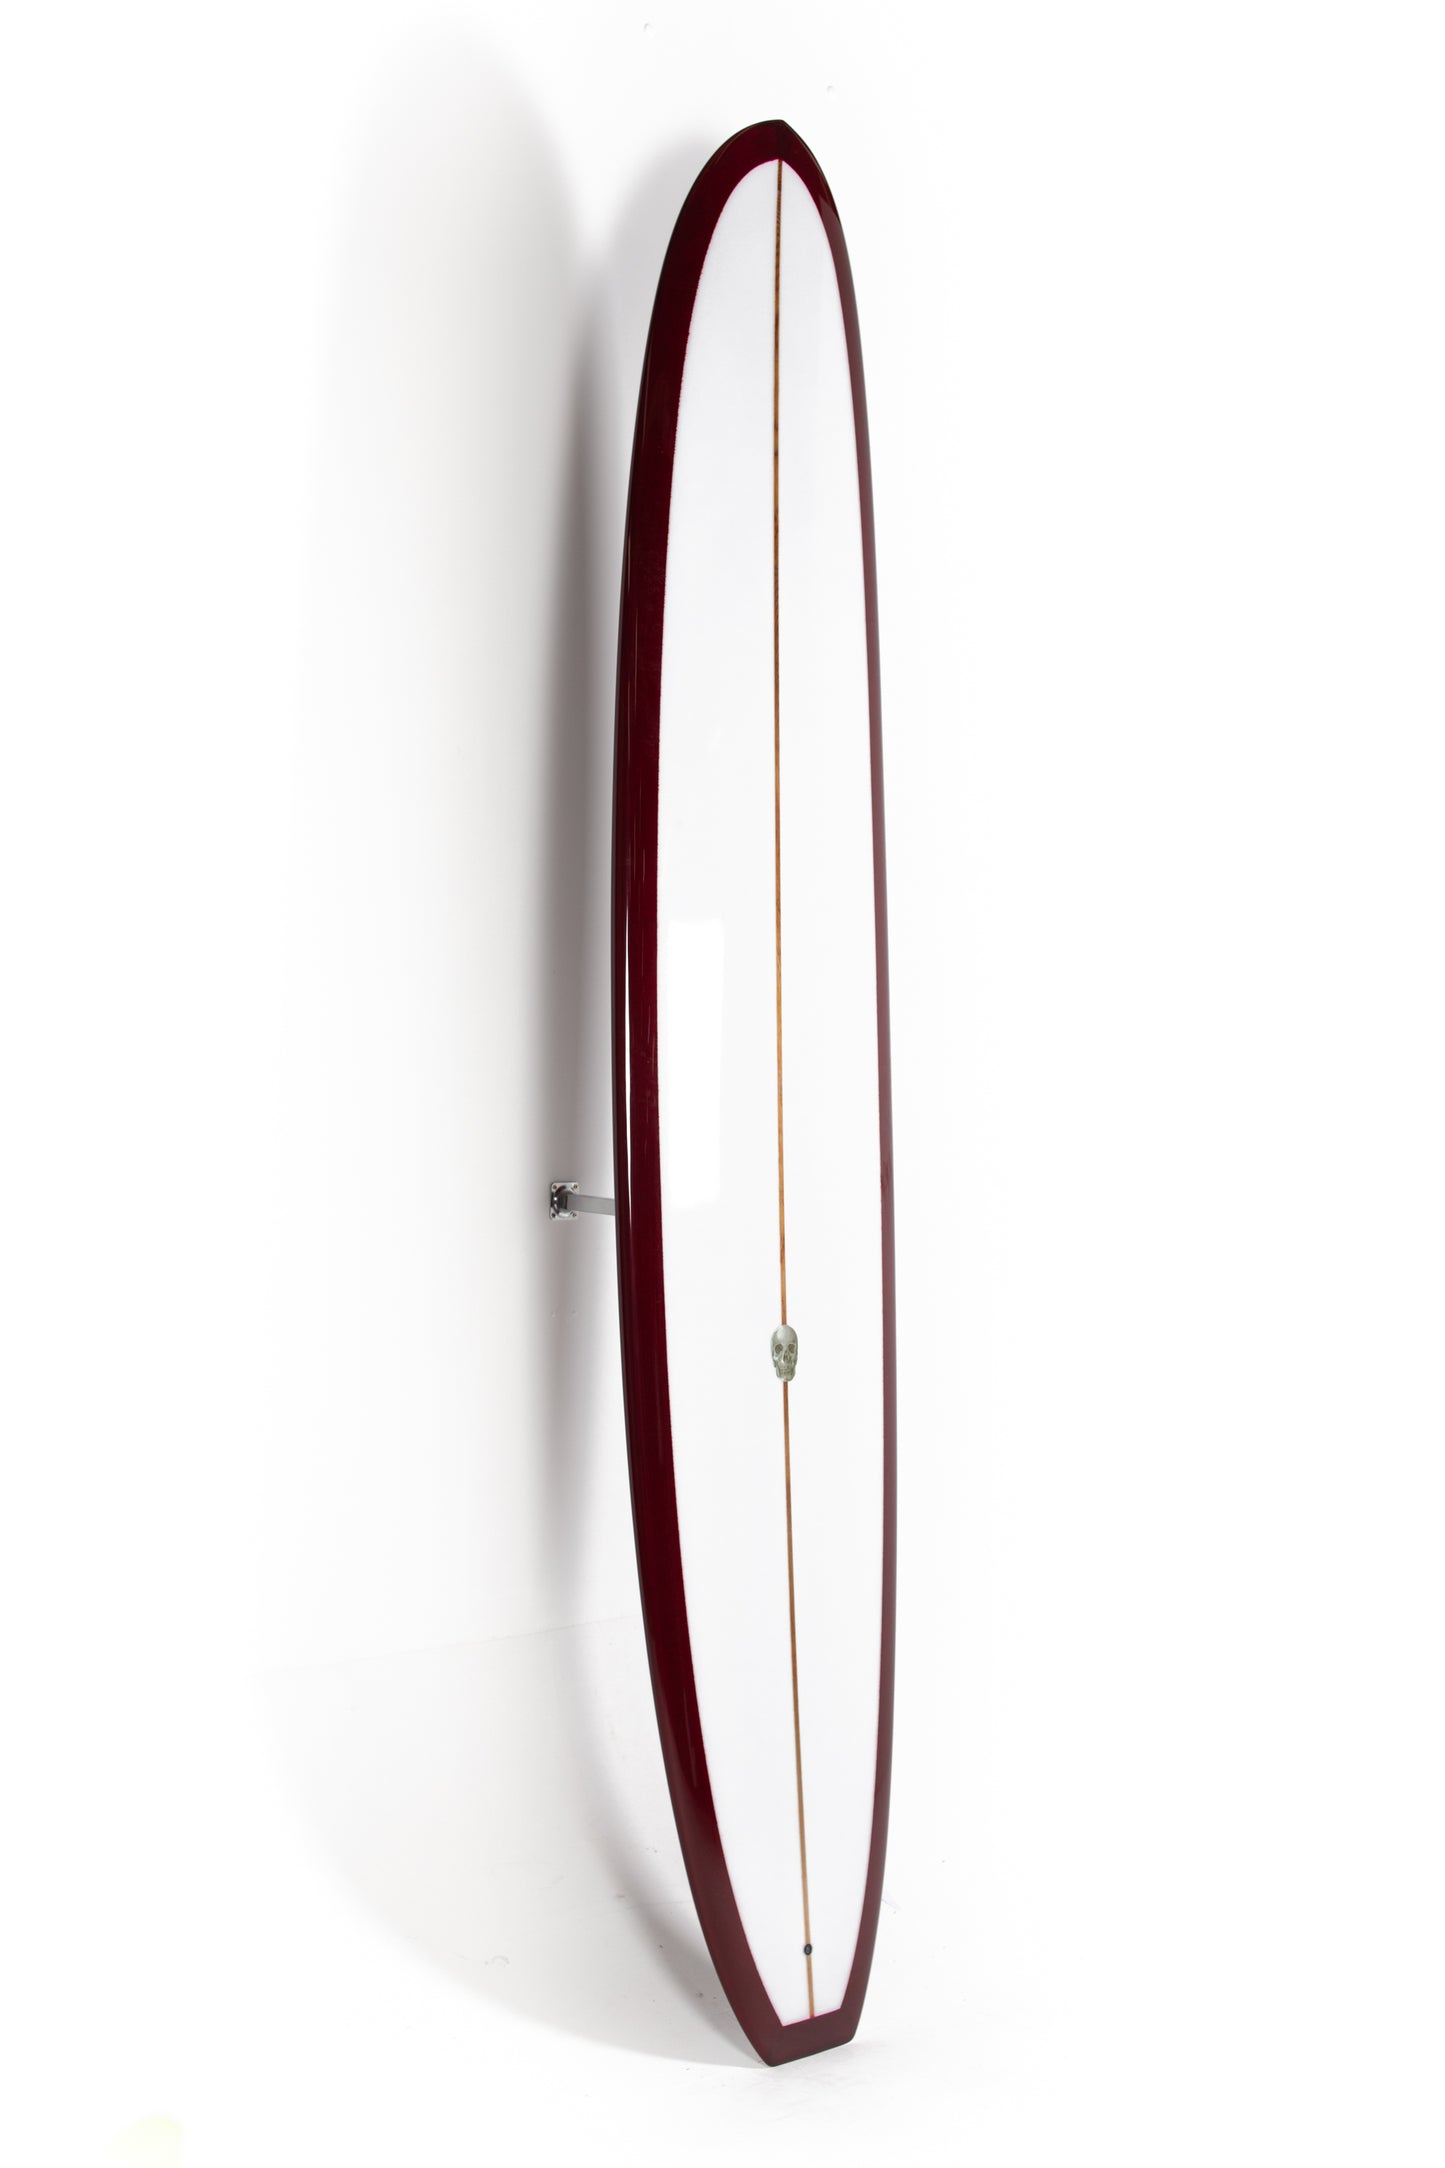 
                  
                    Pukas Surf Shop - Christenson Surfboard  - SCARLET BEGONIA by Chris Christenson - 9'7” x 23 3/8" x 2 15/16" - CX05368
                  
                